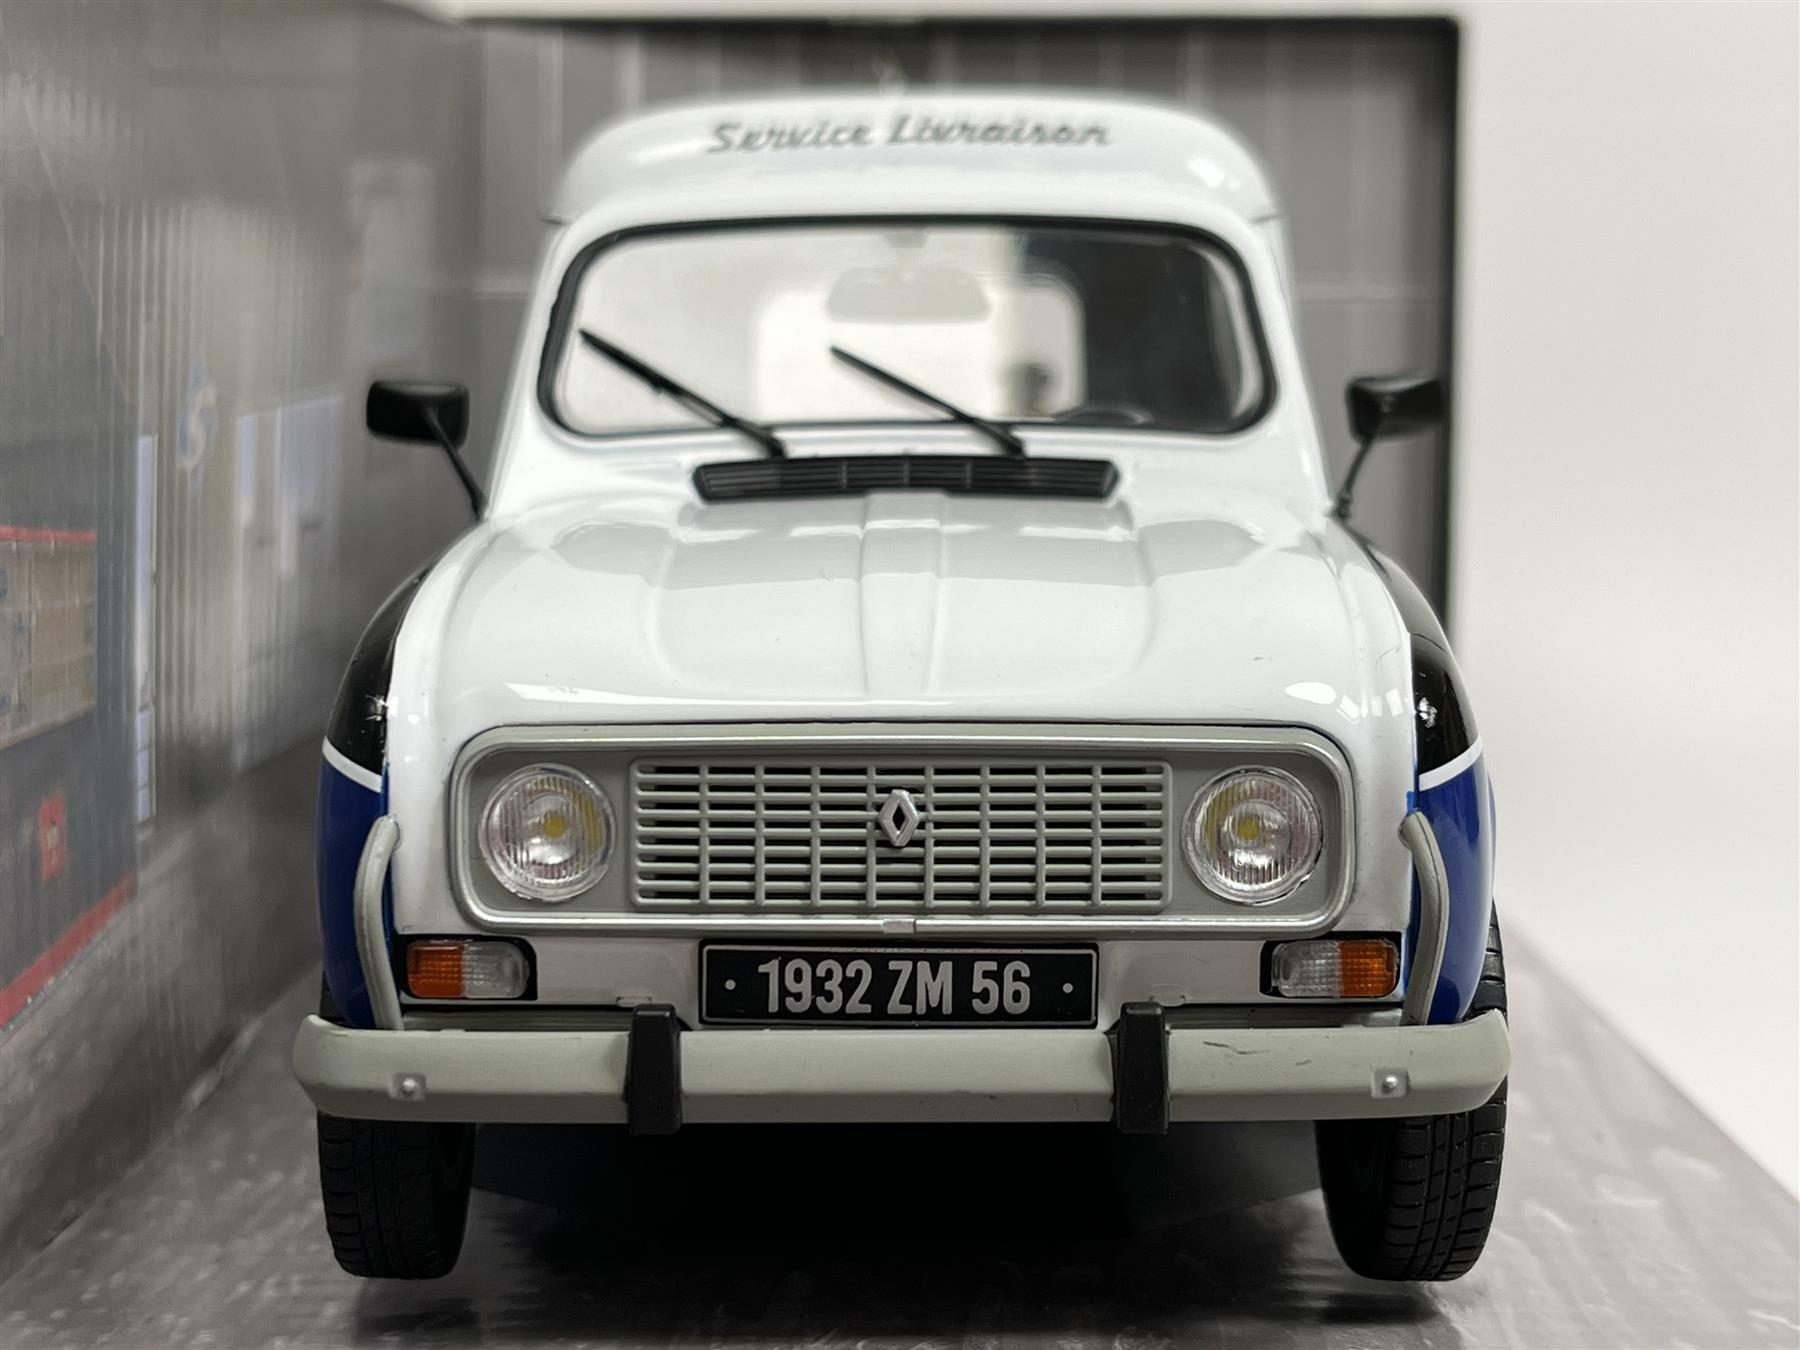 Solido 1:18 Renault R4 LF4 90 Jubilæum 2022 hvid / blå / sort S1802207  model bil S1802207 421182260 3663506019012